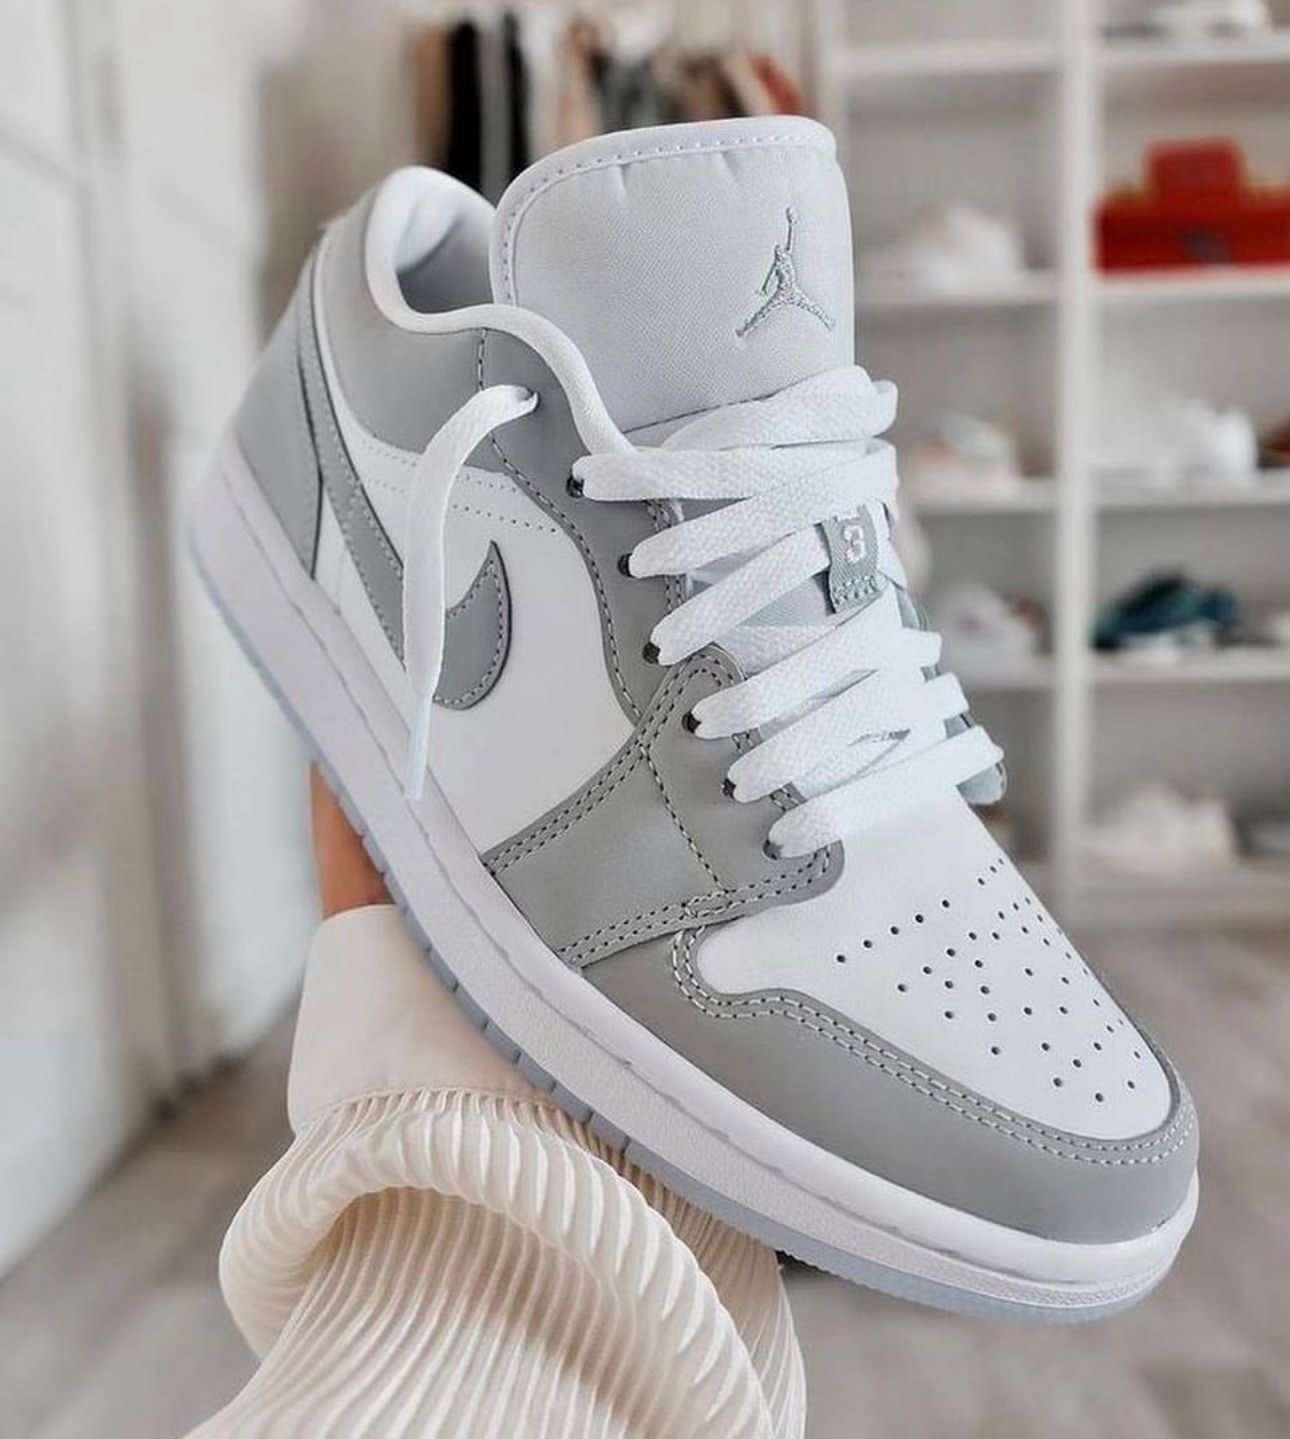 Replica 7AAA Quality Nike Air Jordan 1 Low Wolf Grey Shoes